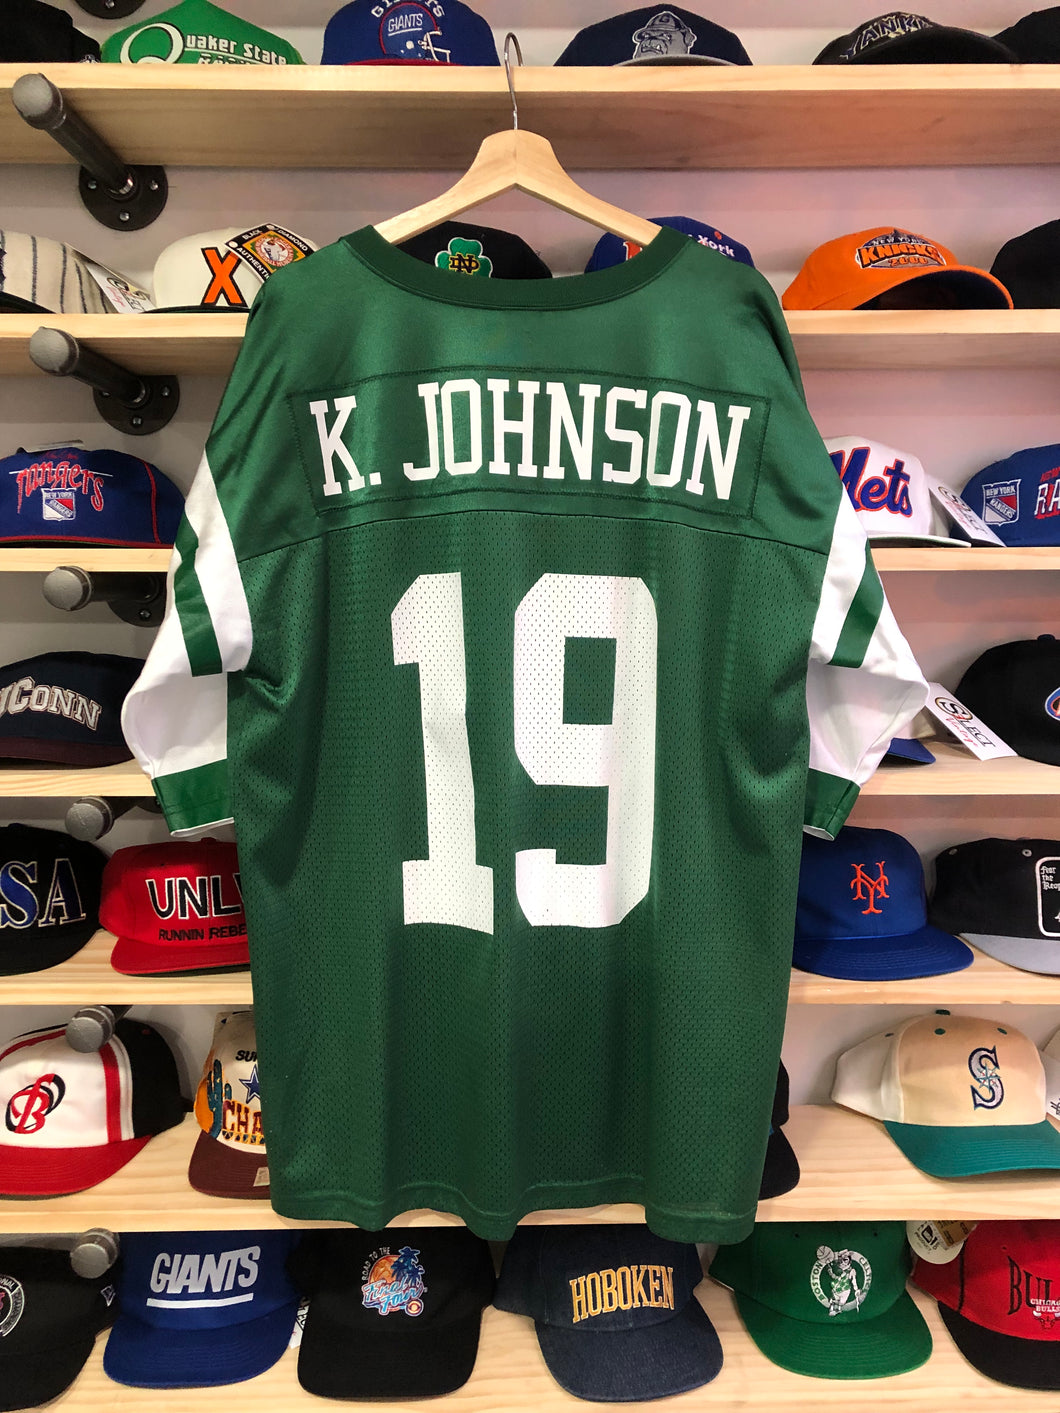 Vintage Nike NFL New York Jets Keyshawn Johnson Jersey Size Large